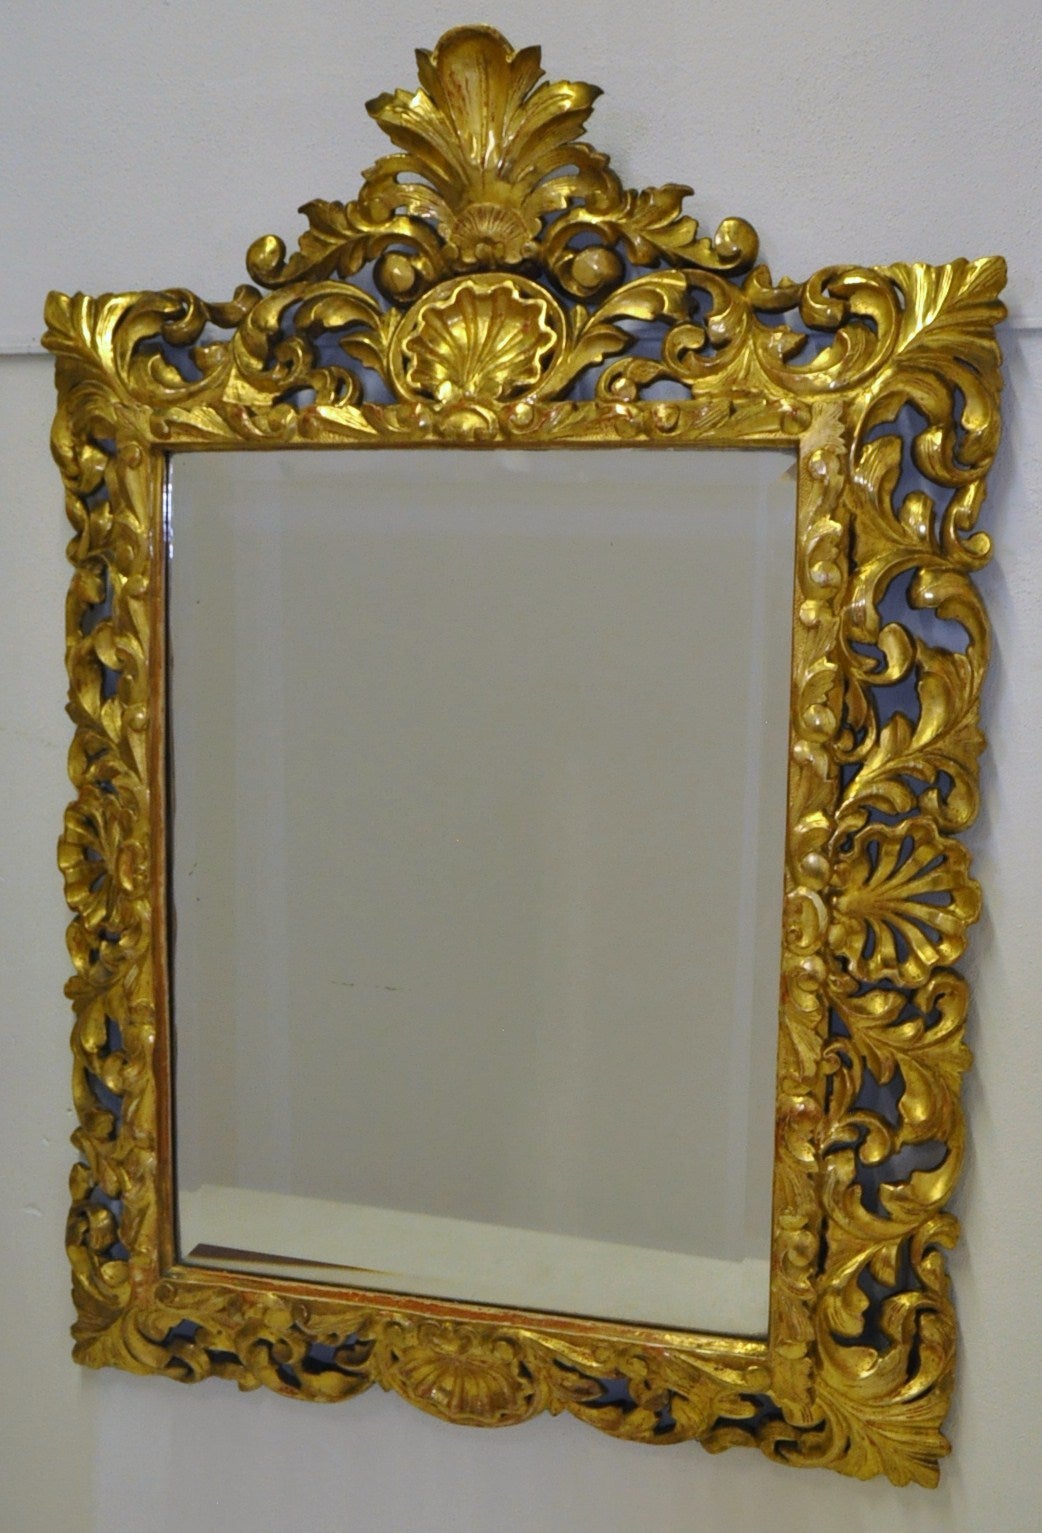 Elegant 19th century wood gold-leaf mirror with original beveled glass (C:1870).
Fabulous finish!